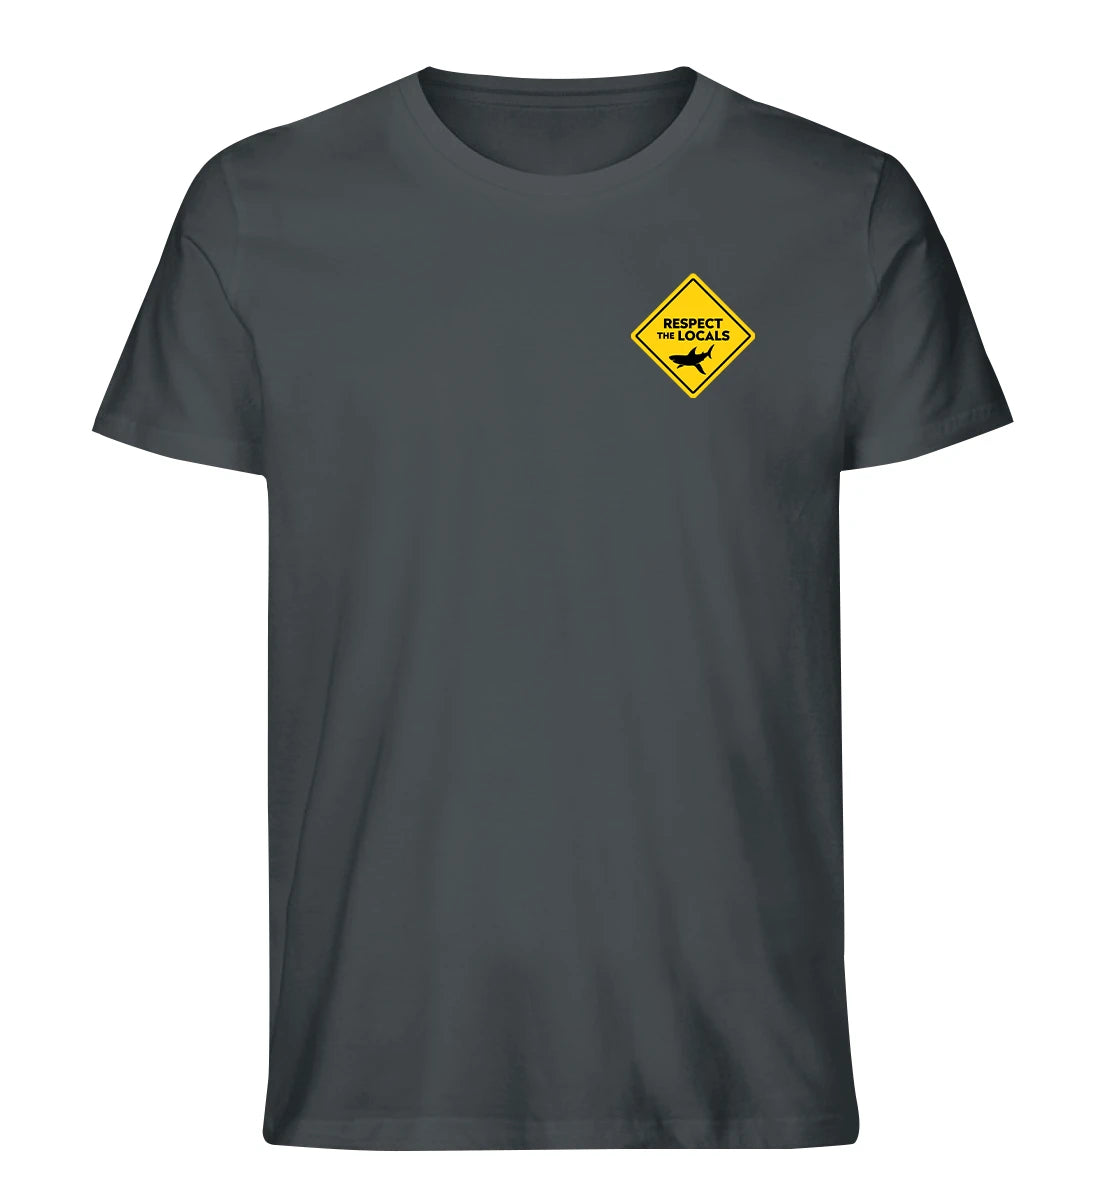 Respect the Locals / sharks - 100 % Bio T-Shirt